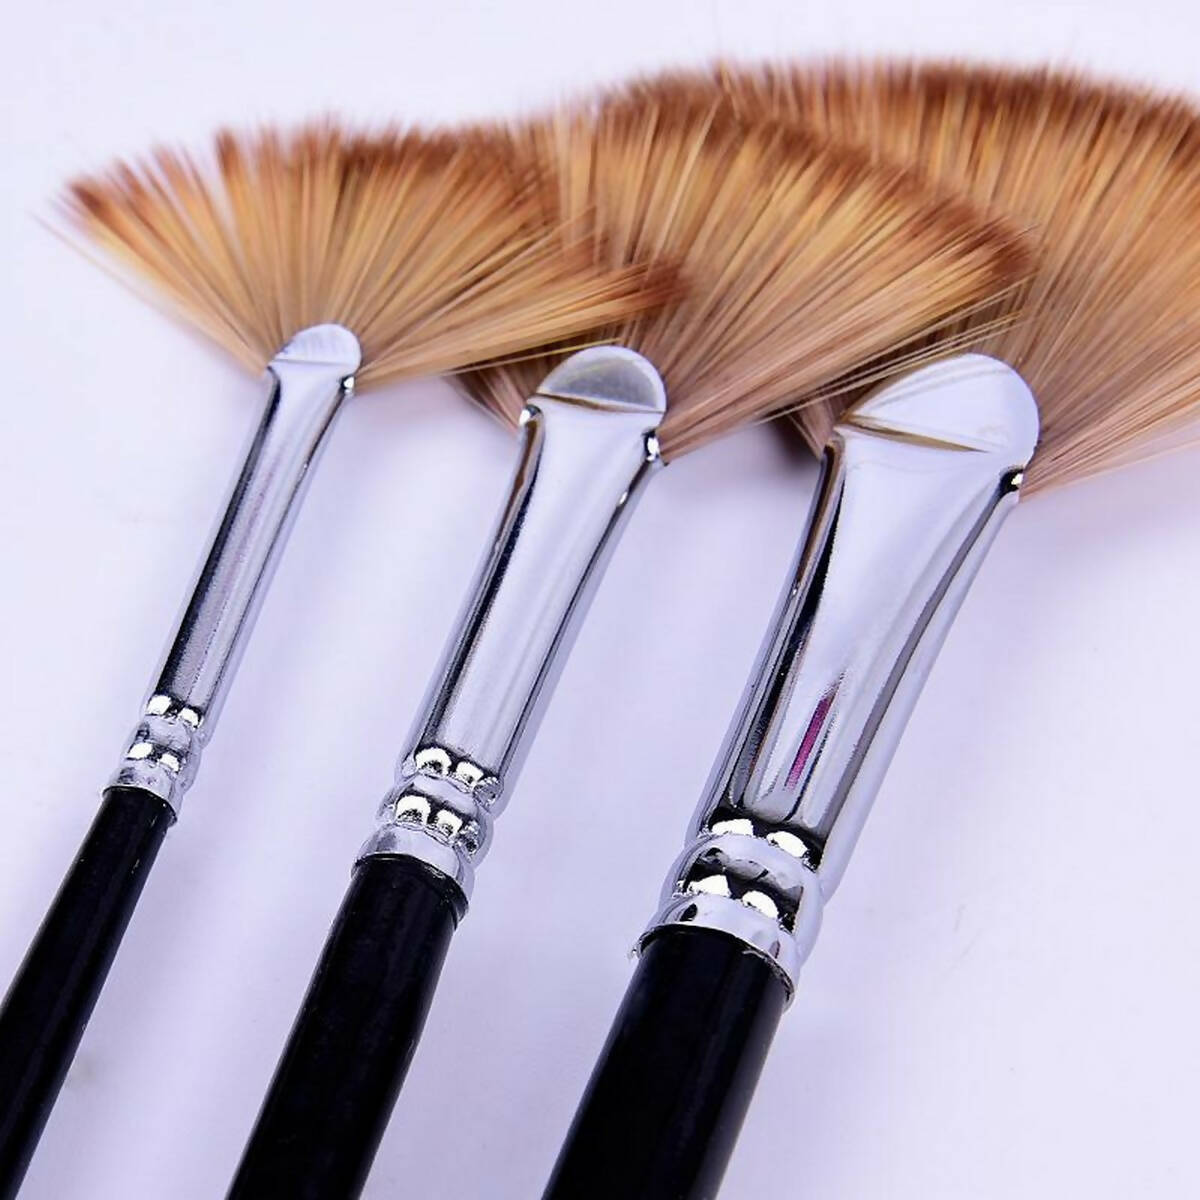 Dugato Wei Yi Artist Fan Paint Brushes Set 3pcs - Soft Anti-Shedding Nylon Hair Wood Long Handle Paint Brush Set For Acrylic Watercolor Oil Gouche Painting